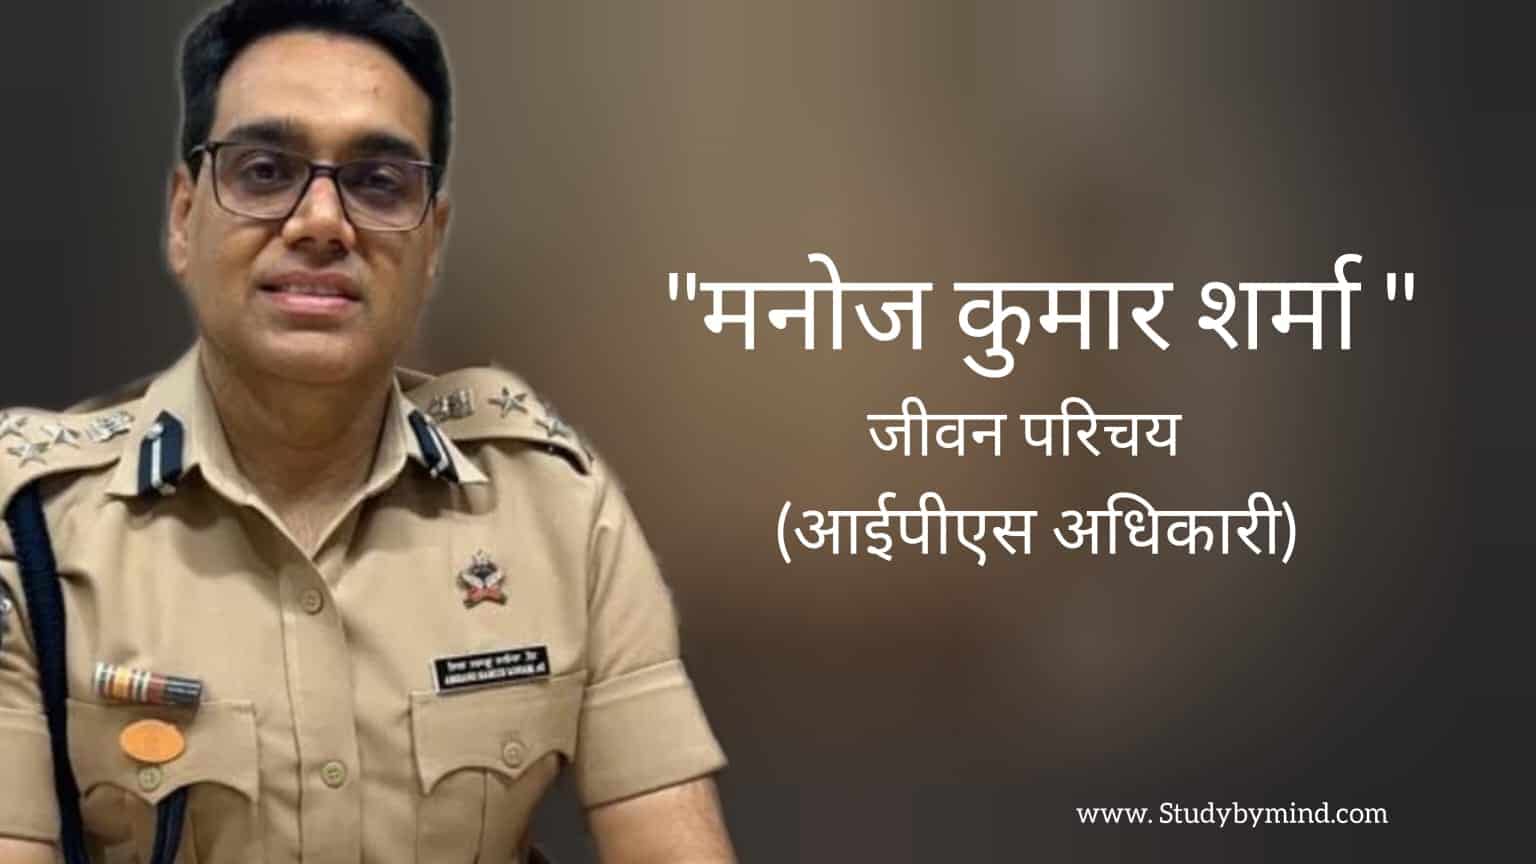 You are currently viewing मनोज कुमार शर्मा जीवन परिचय Manoj kumar sharma biography in hindi (IPS Officer)